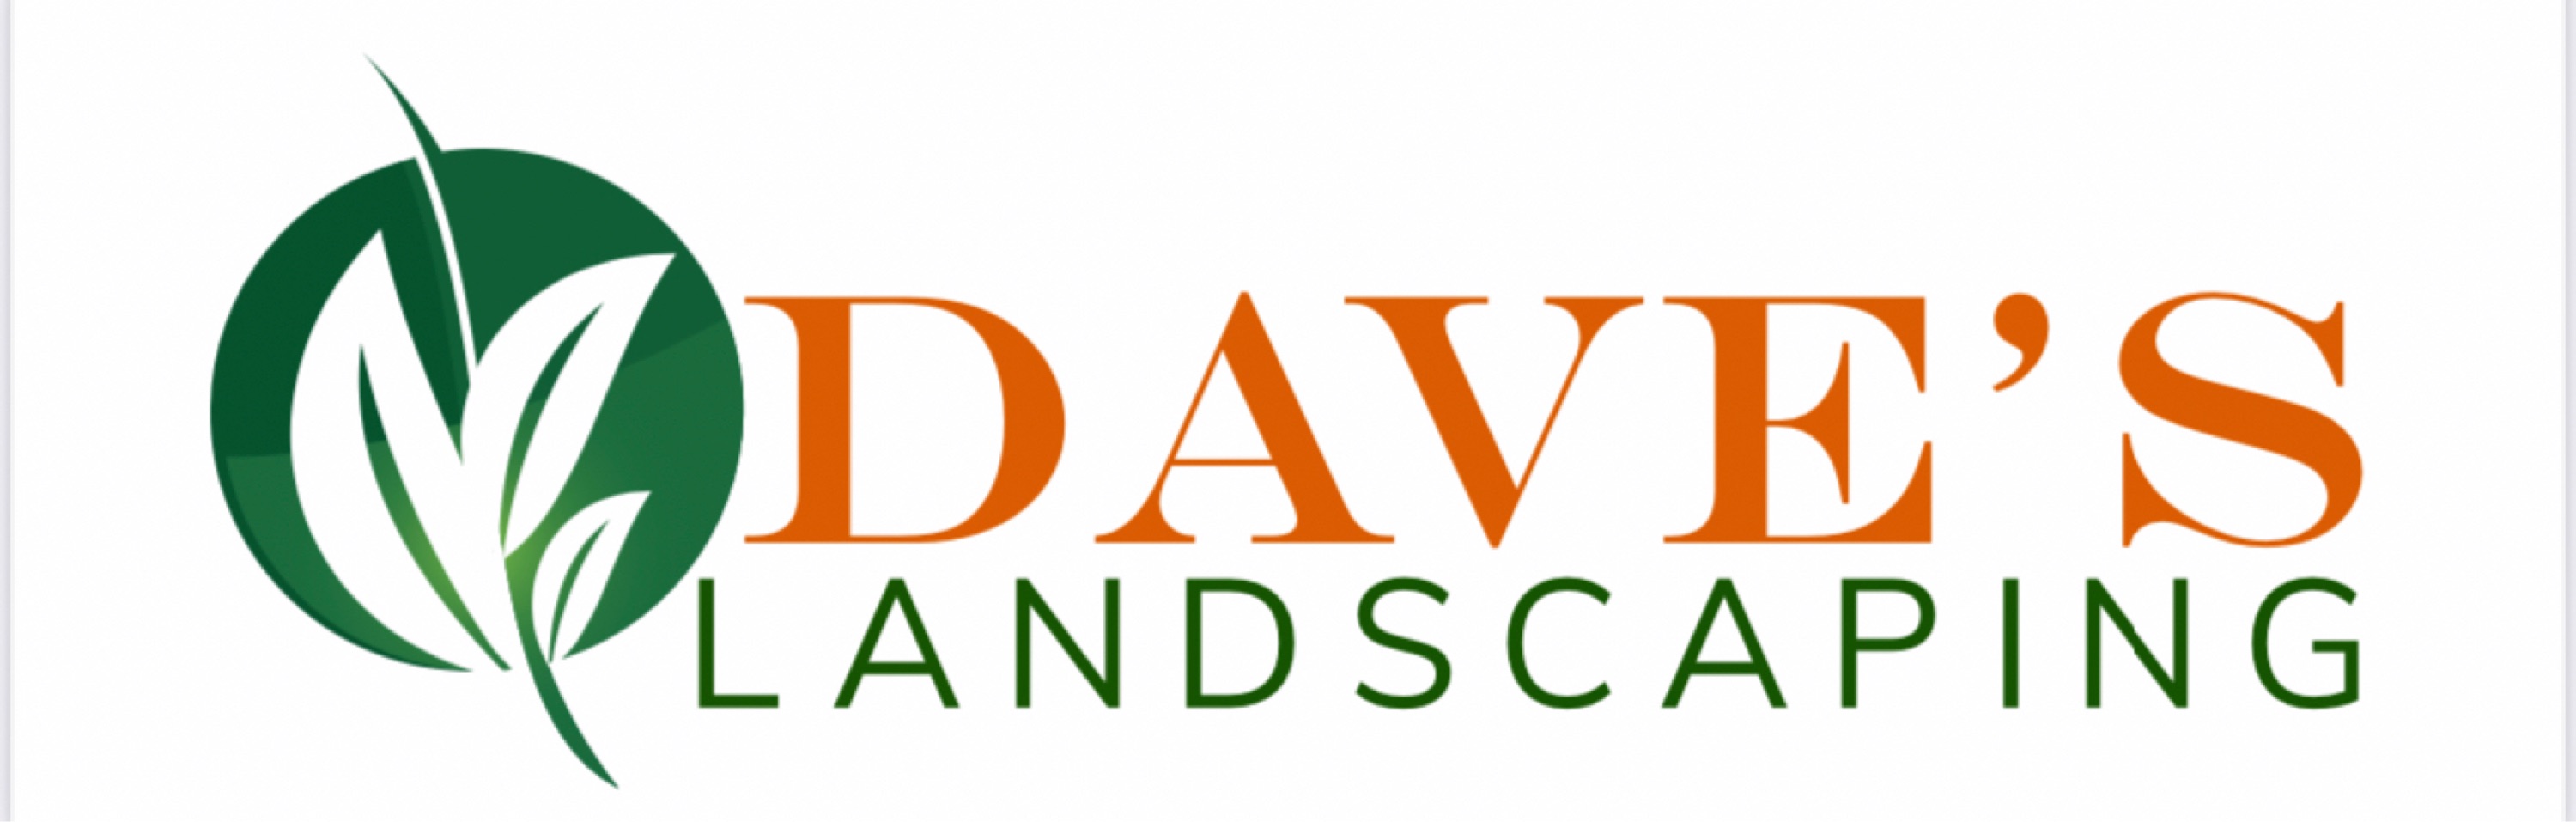 Dave's Landscaping Logo